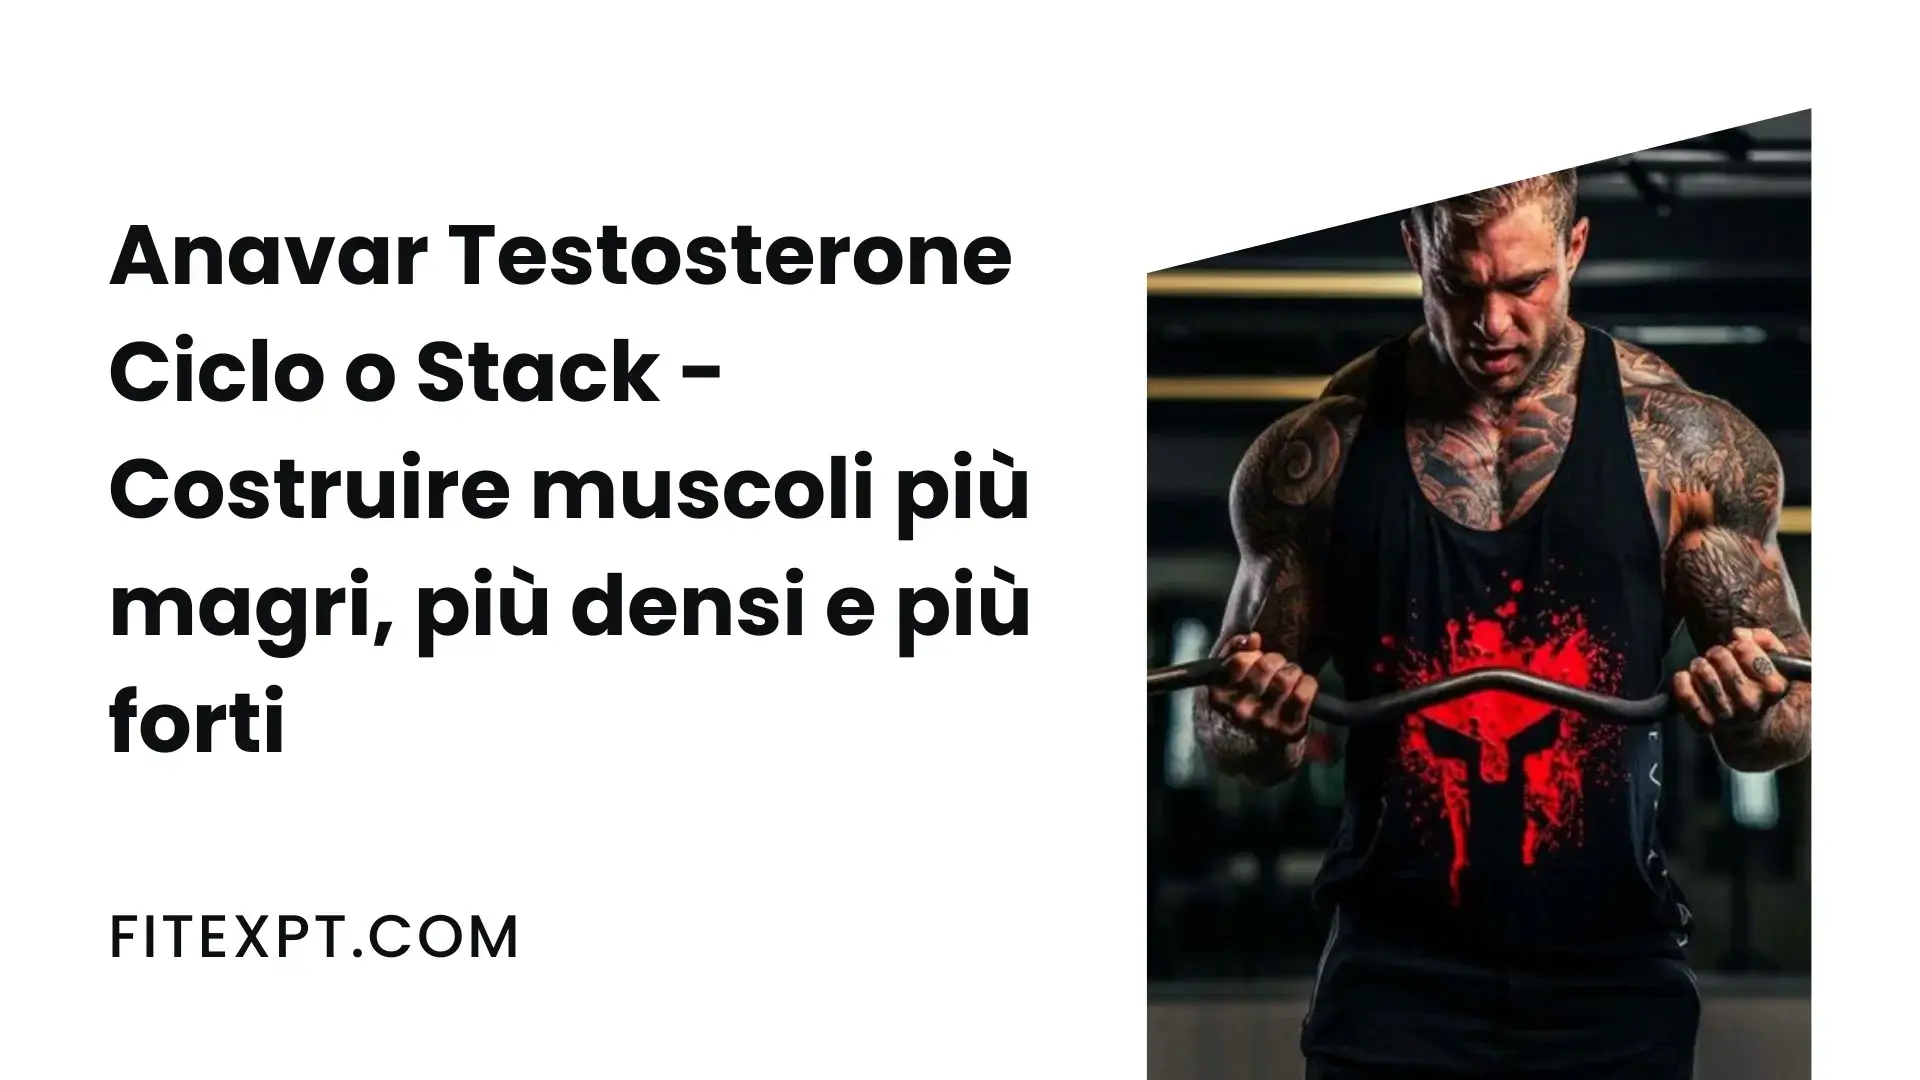 Anavar Testosterone Ciclo o Stack